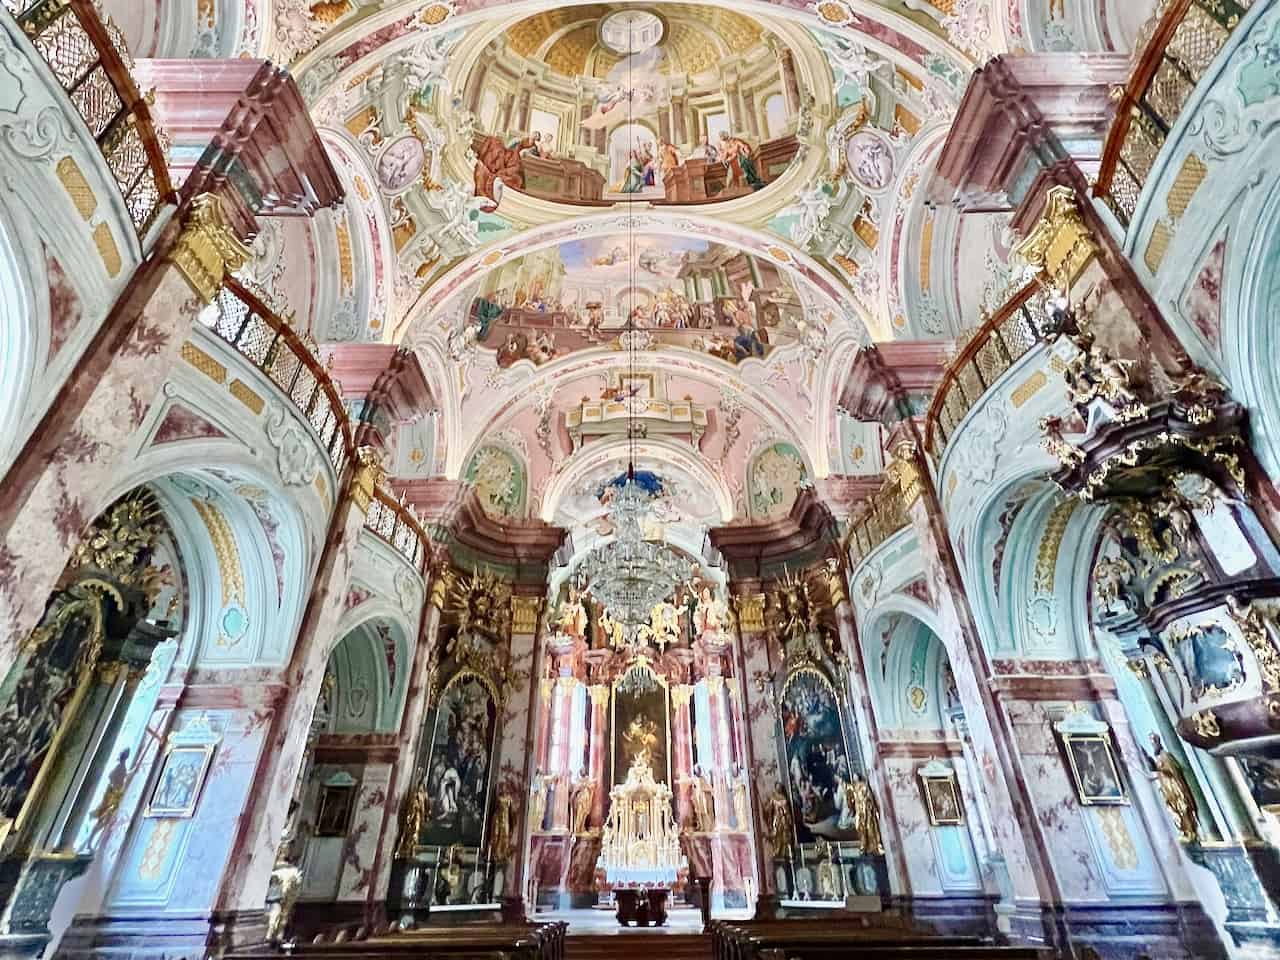 Rein Abbey: a magnificent monastery near Graz